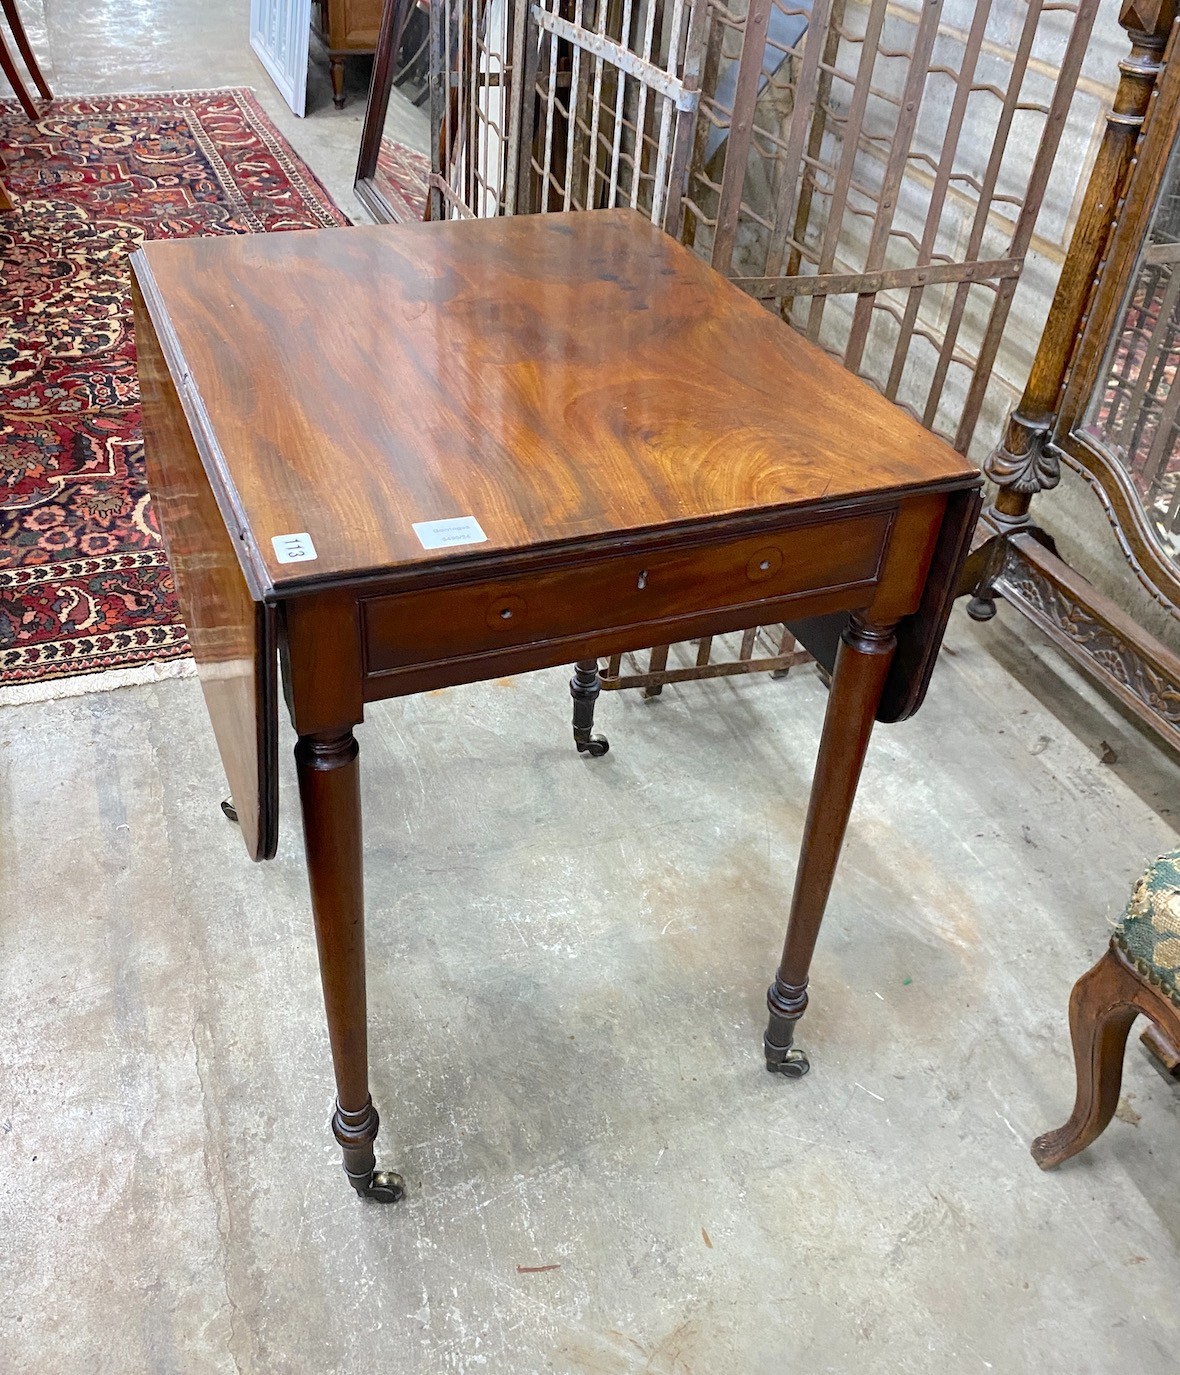 A small George III mahogany Pembroke table, width 61cm, depth 52cm, height 72cm